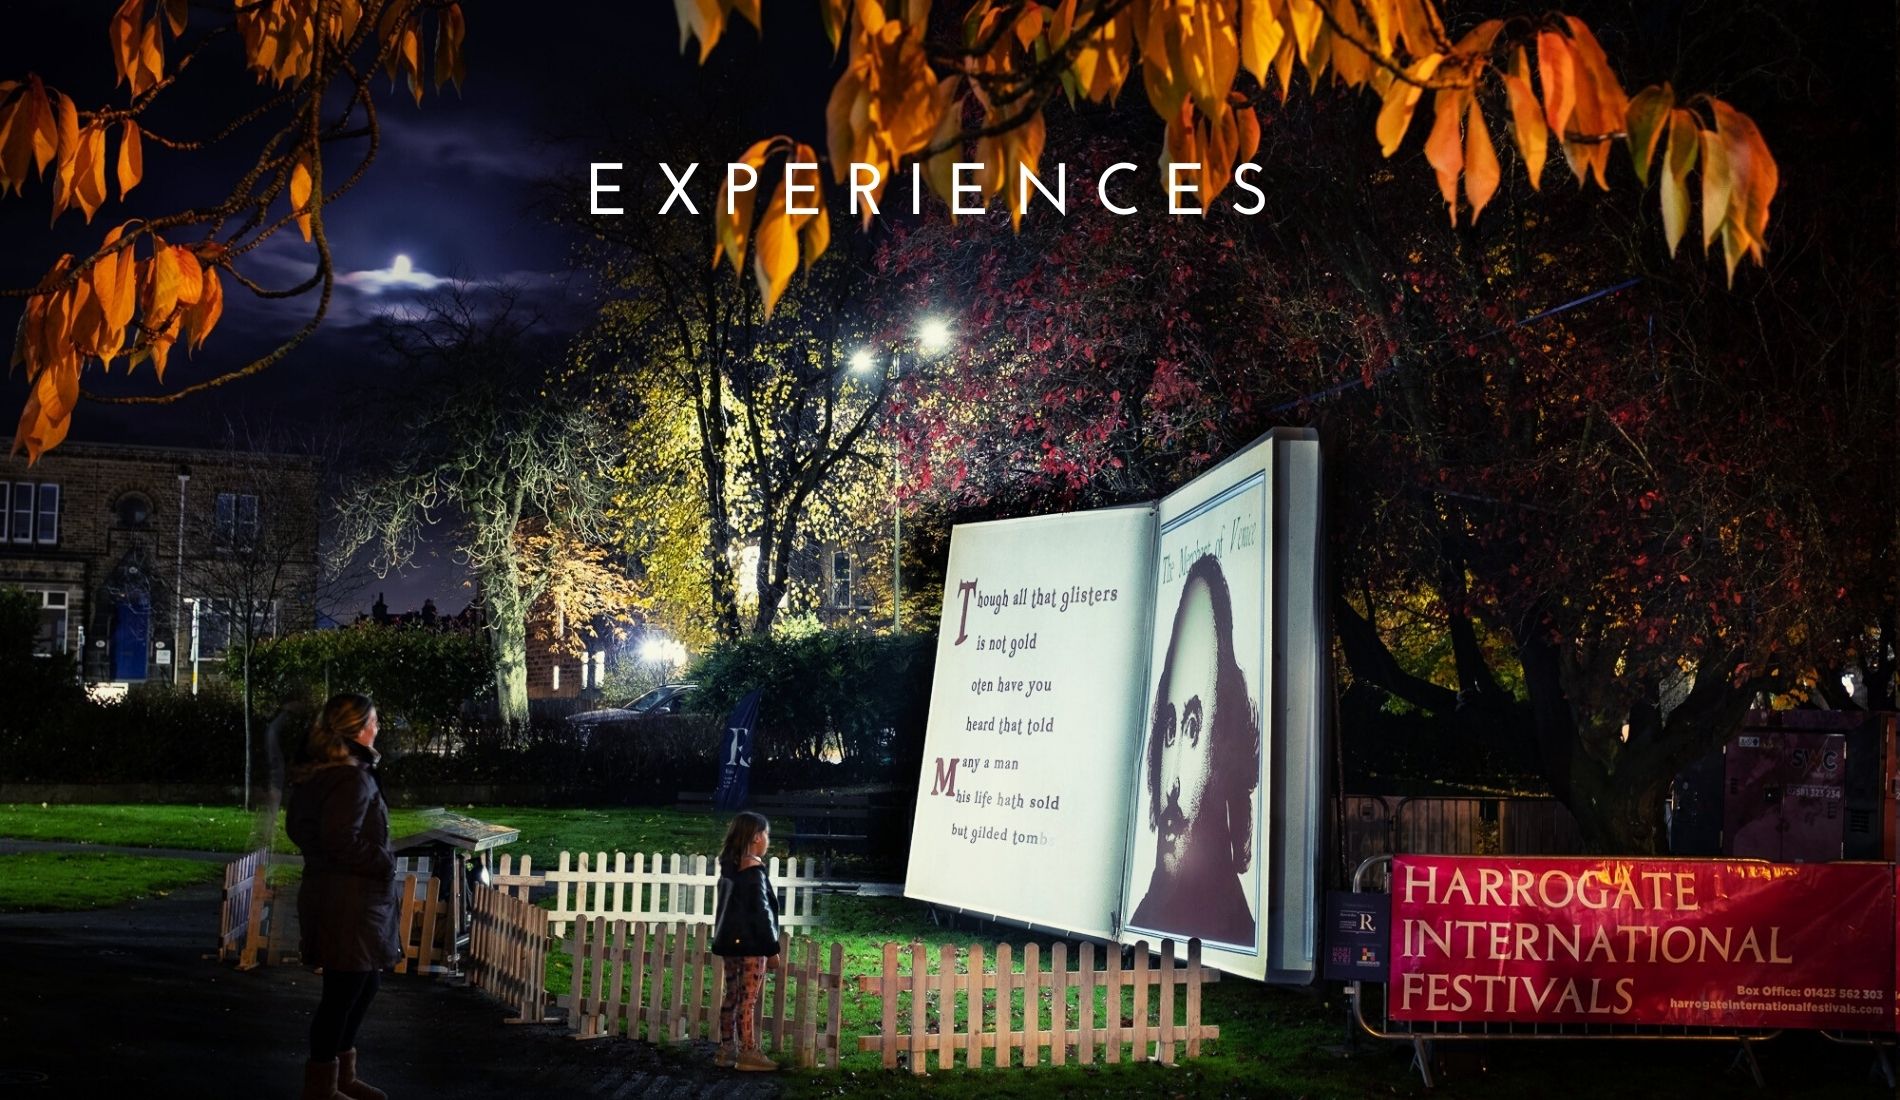 Harrogate International Festivals Experiences